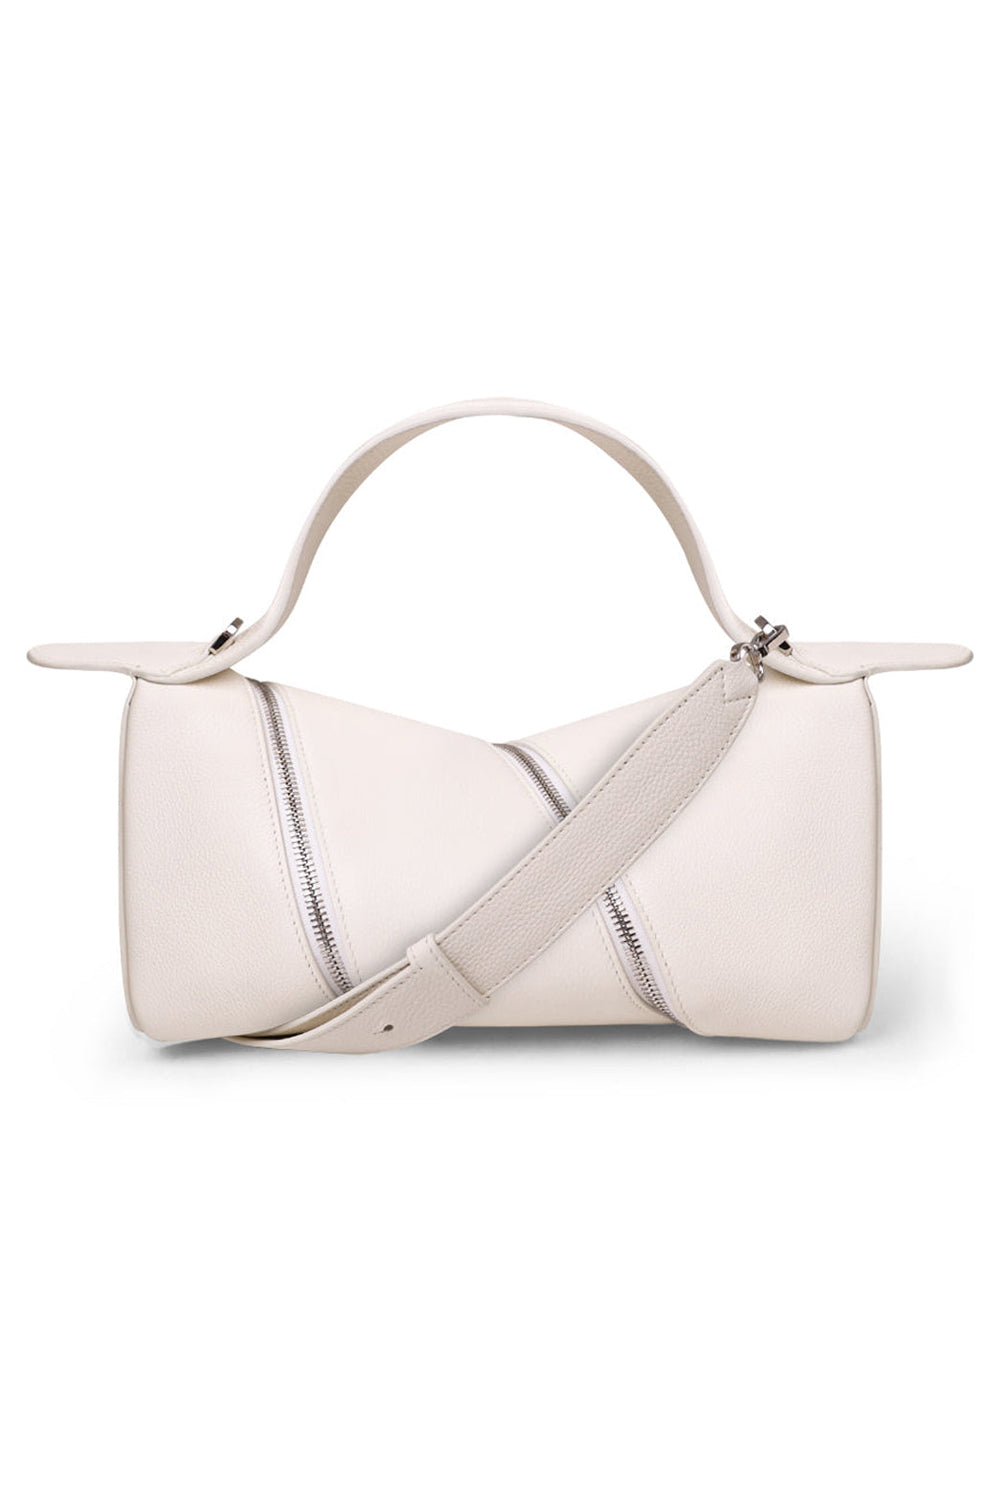 ALAIA BAGS WHITE Le Zip Adjustable Strap Bag | Ivory